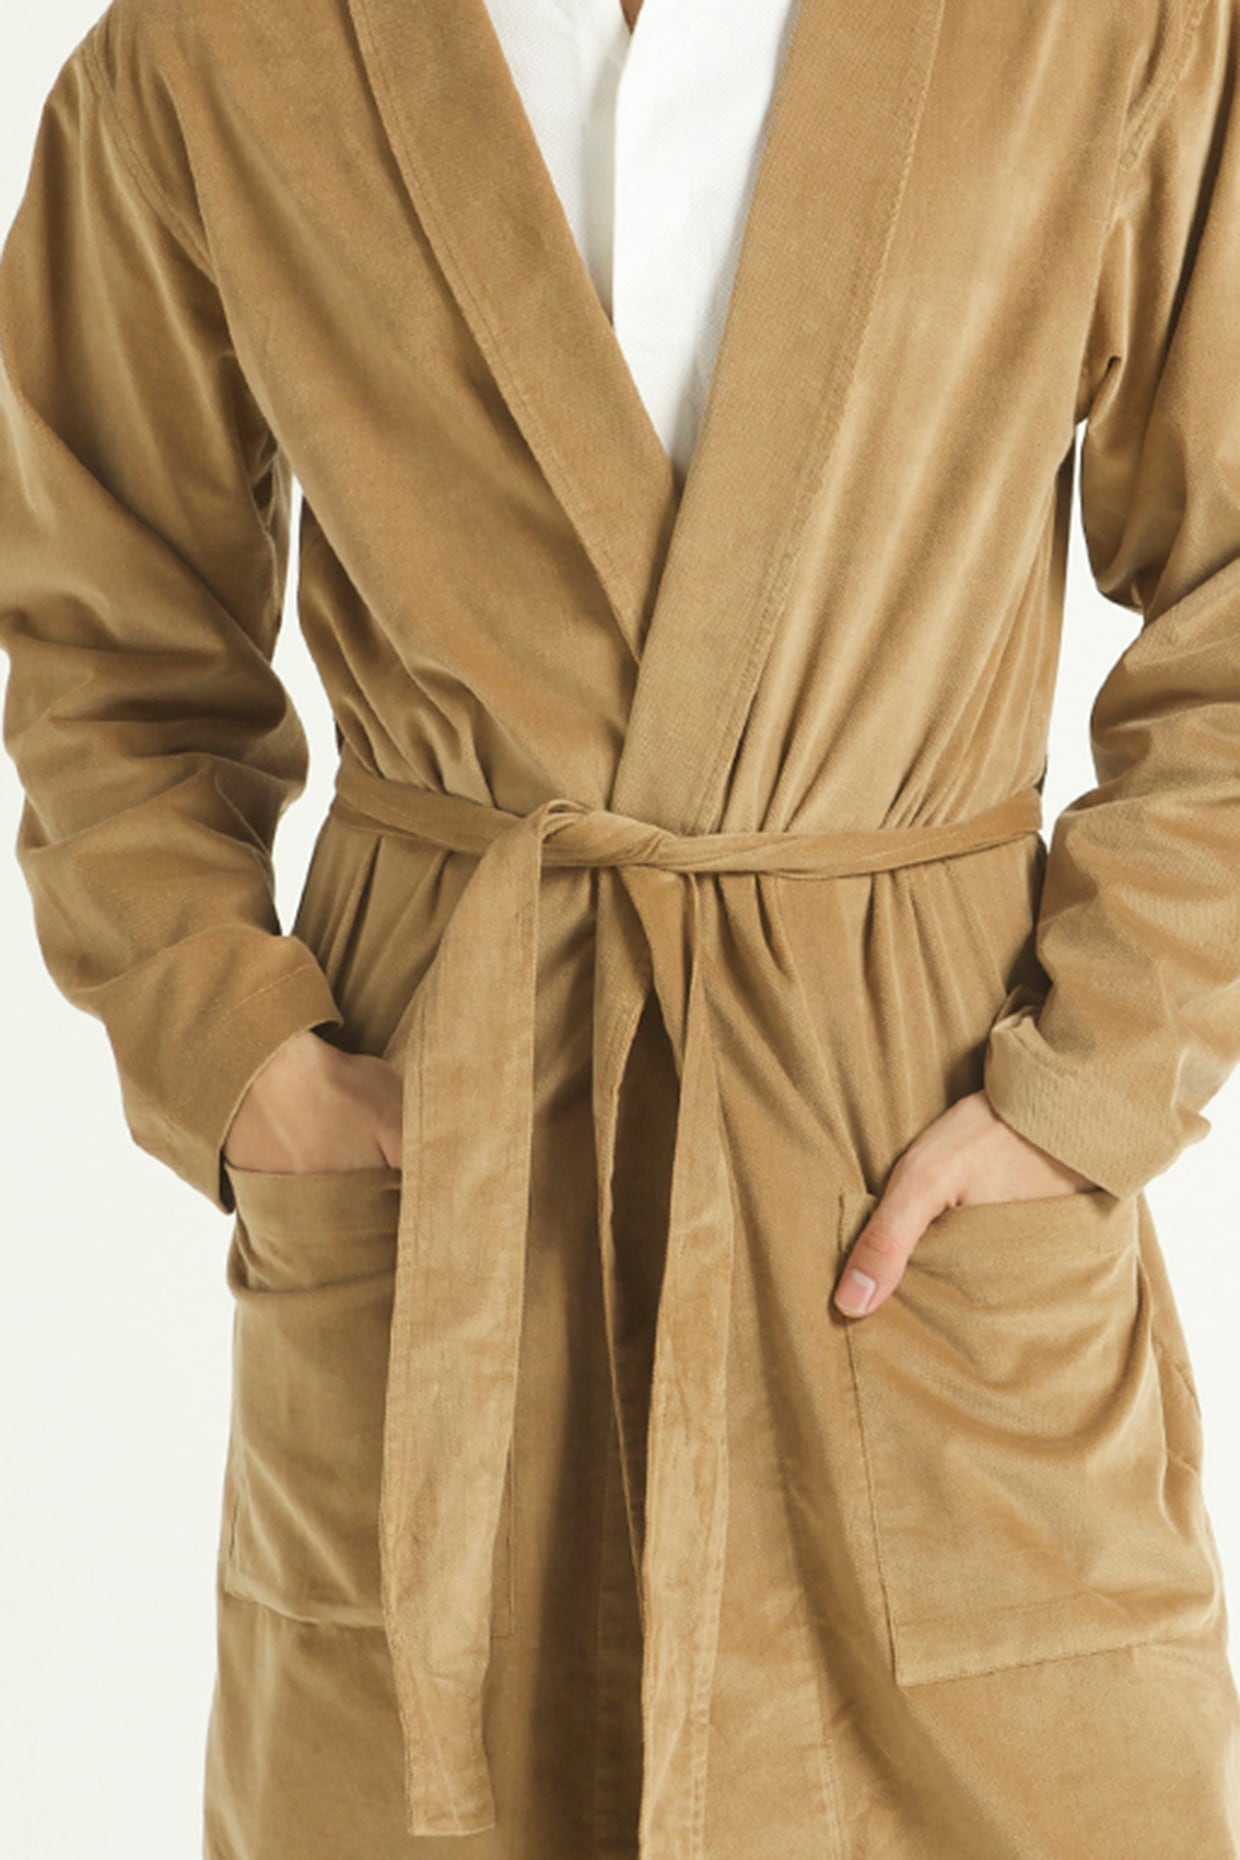 Khaki Corduroy Front Open Robe Design by Dash and Dot Men at